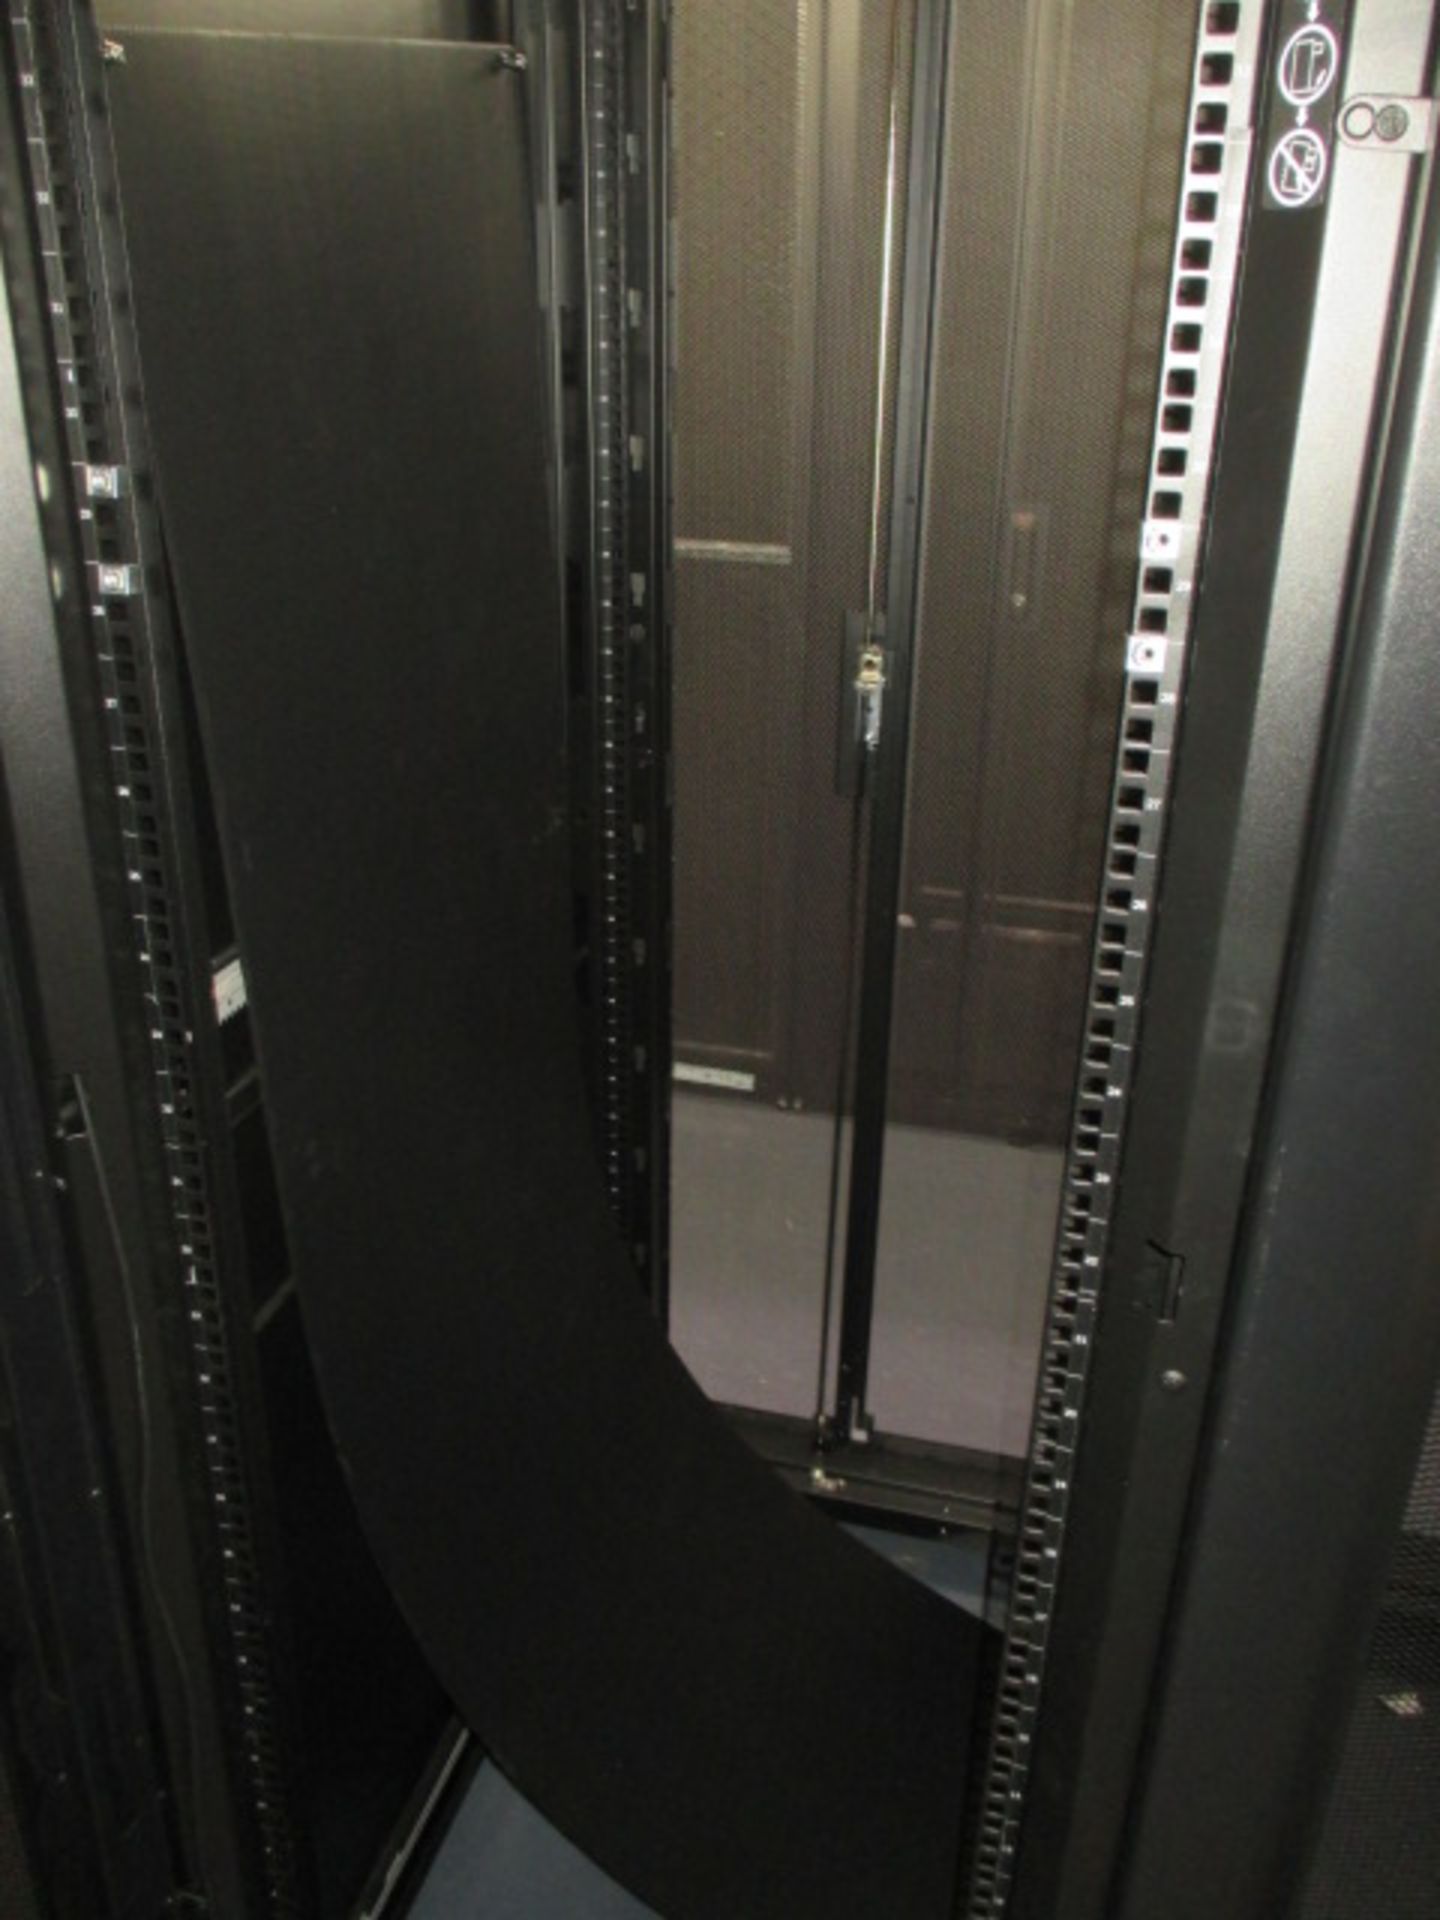 Schneider Server Racks - Image 2 of 3